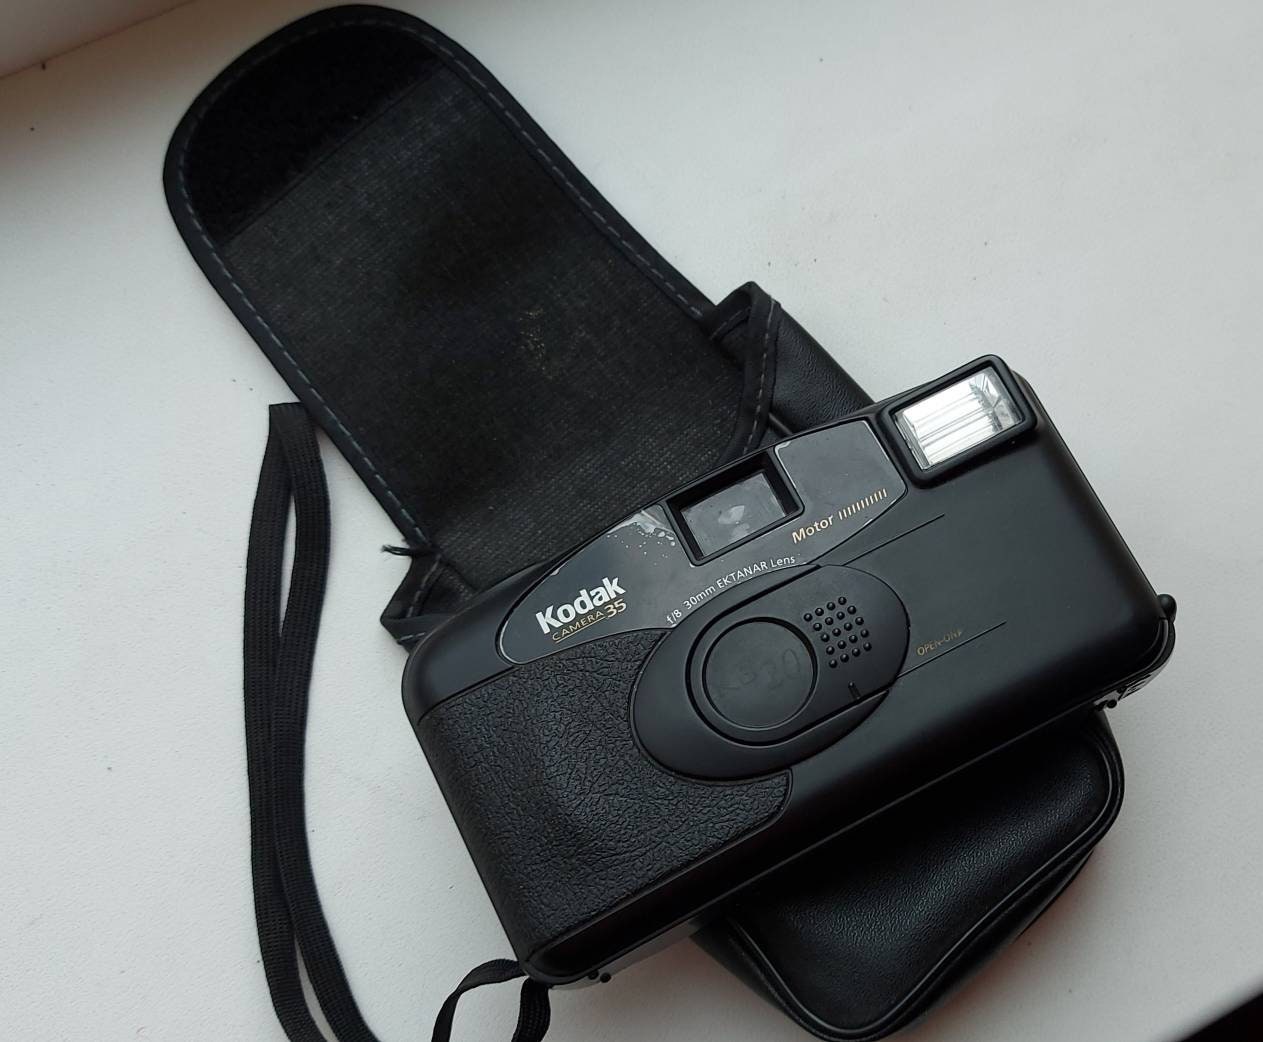 1996-1998: Kodak KB20, Cámaras fabricadas de: 1996 a: 1998.…